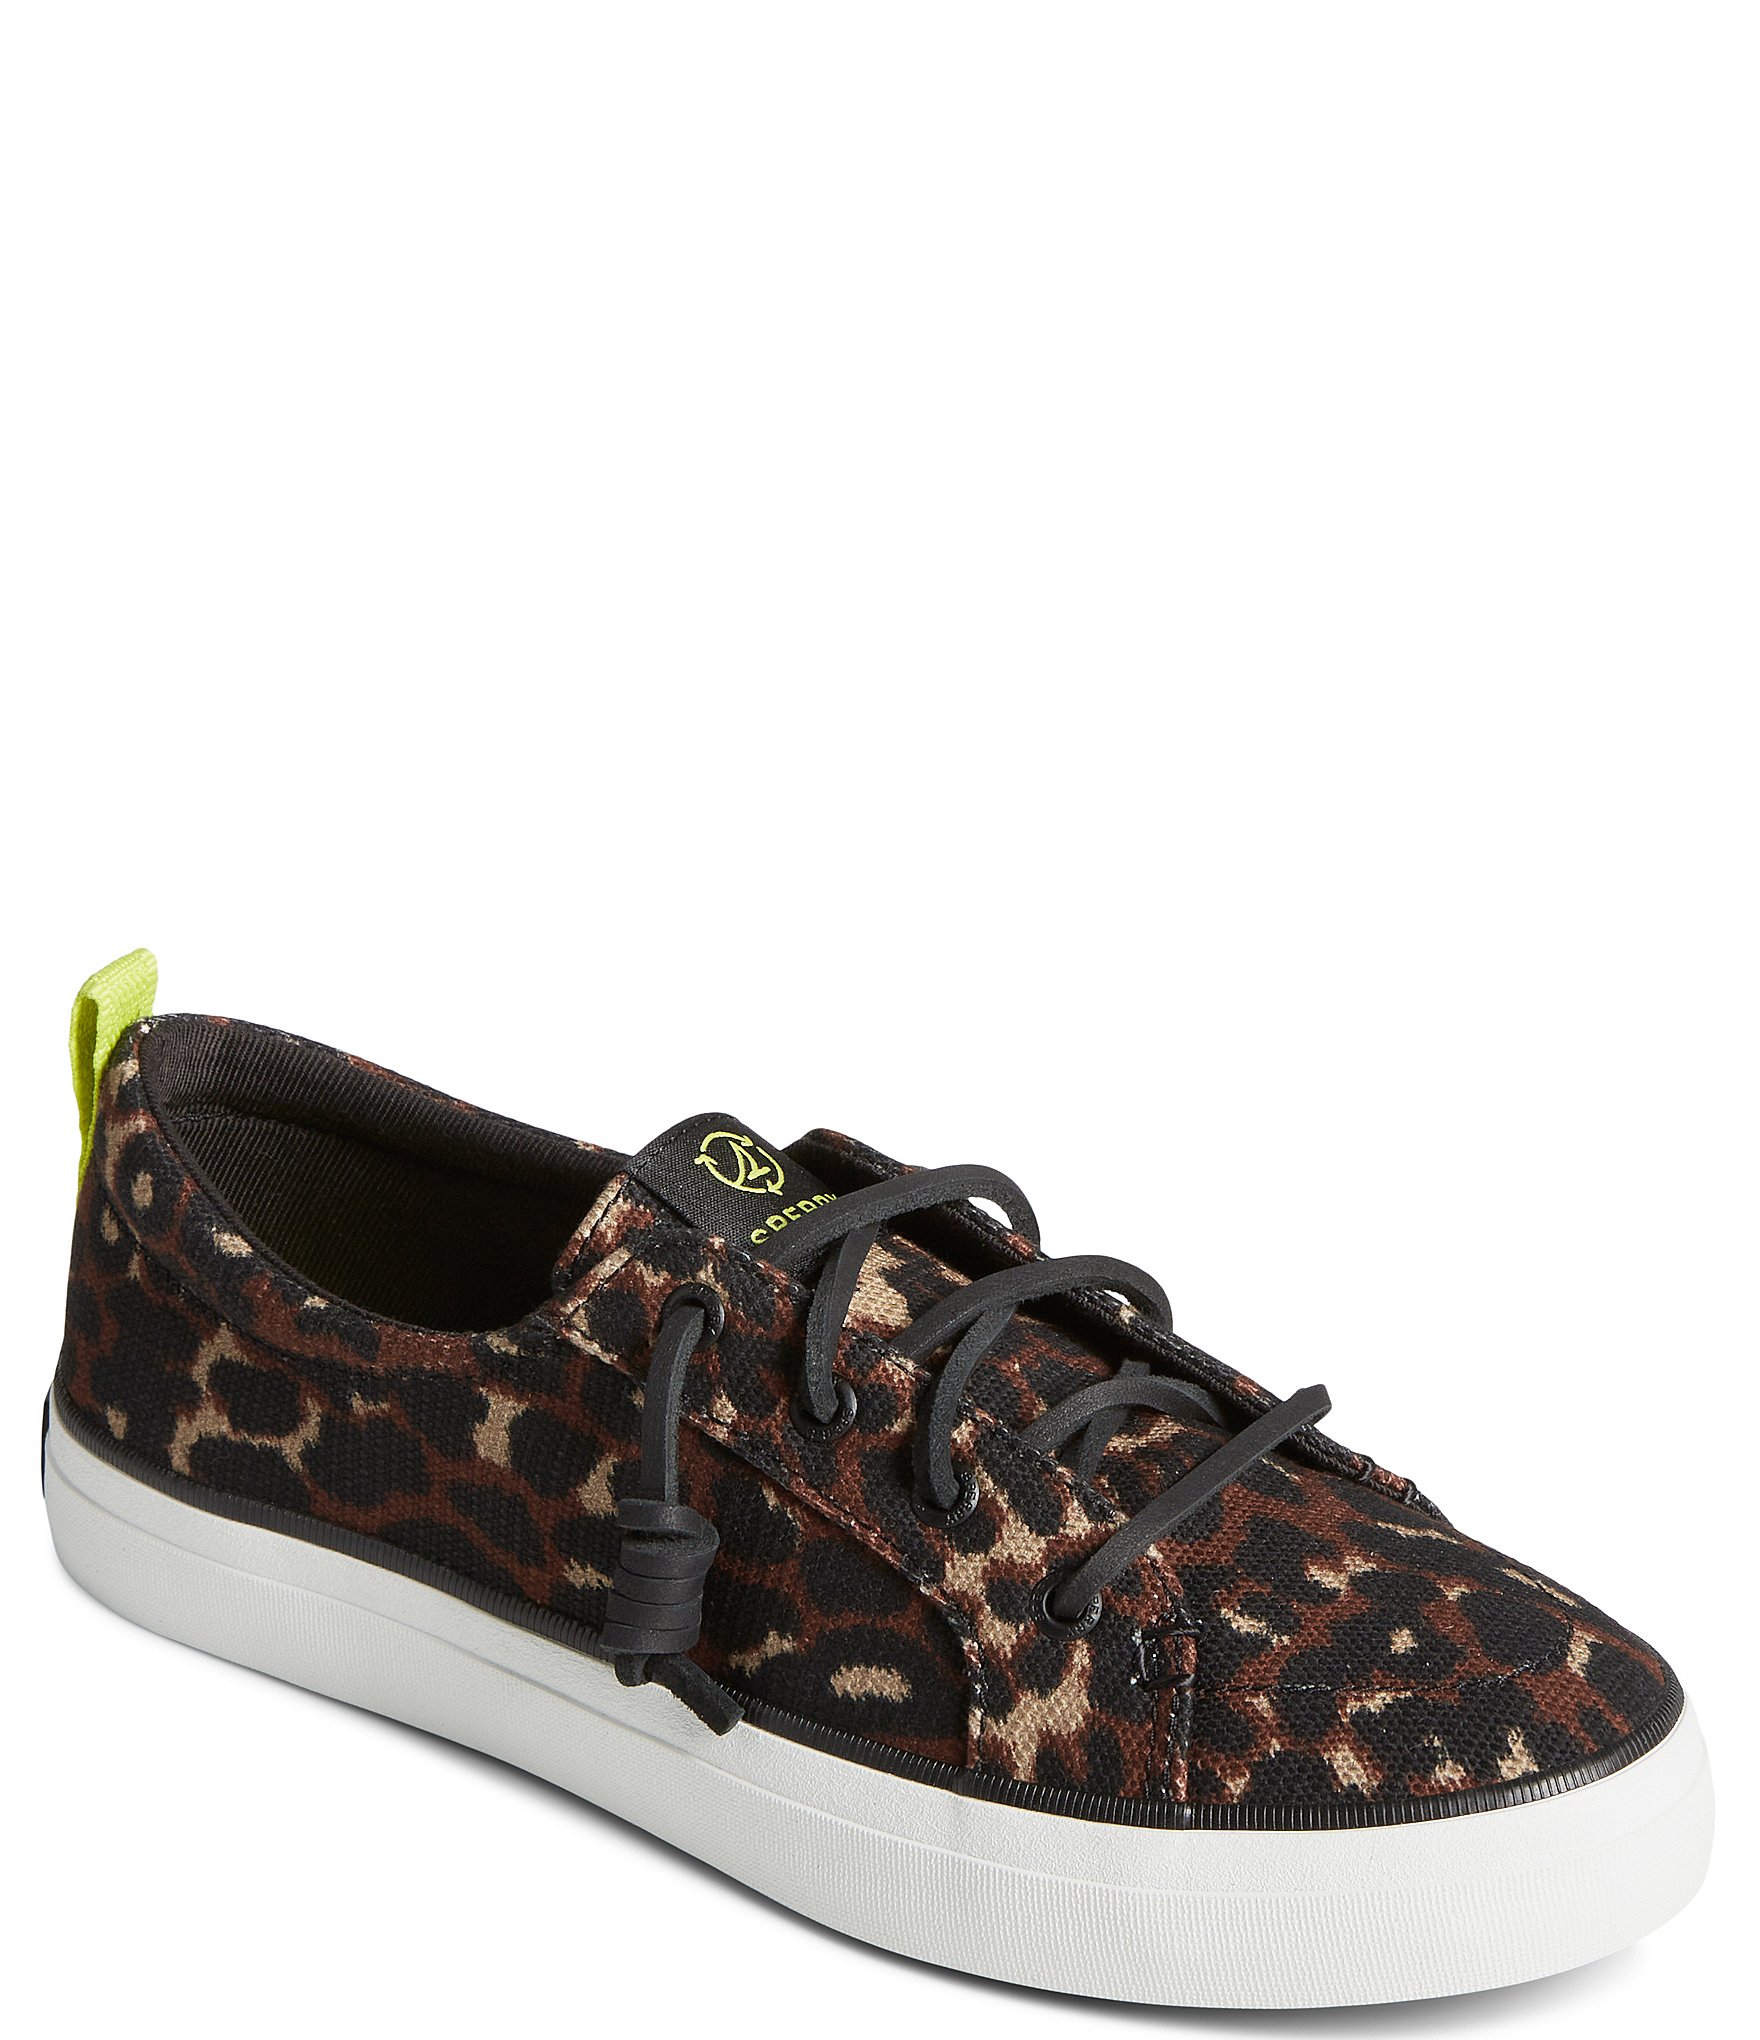 Unisex Authentic Leopard Sneakers in Leopard Black & White - Glue Store